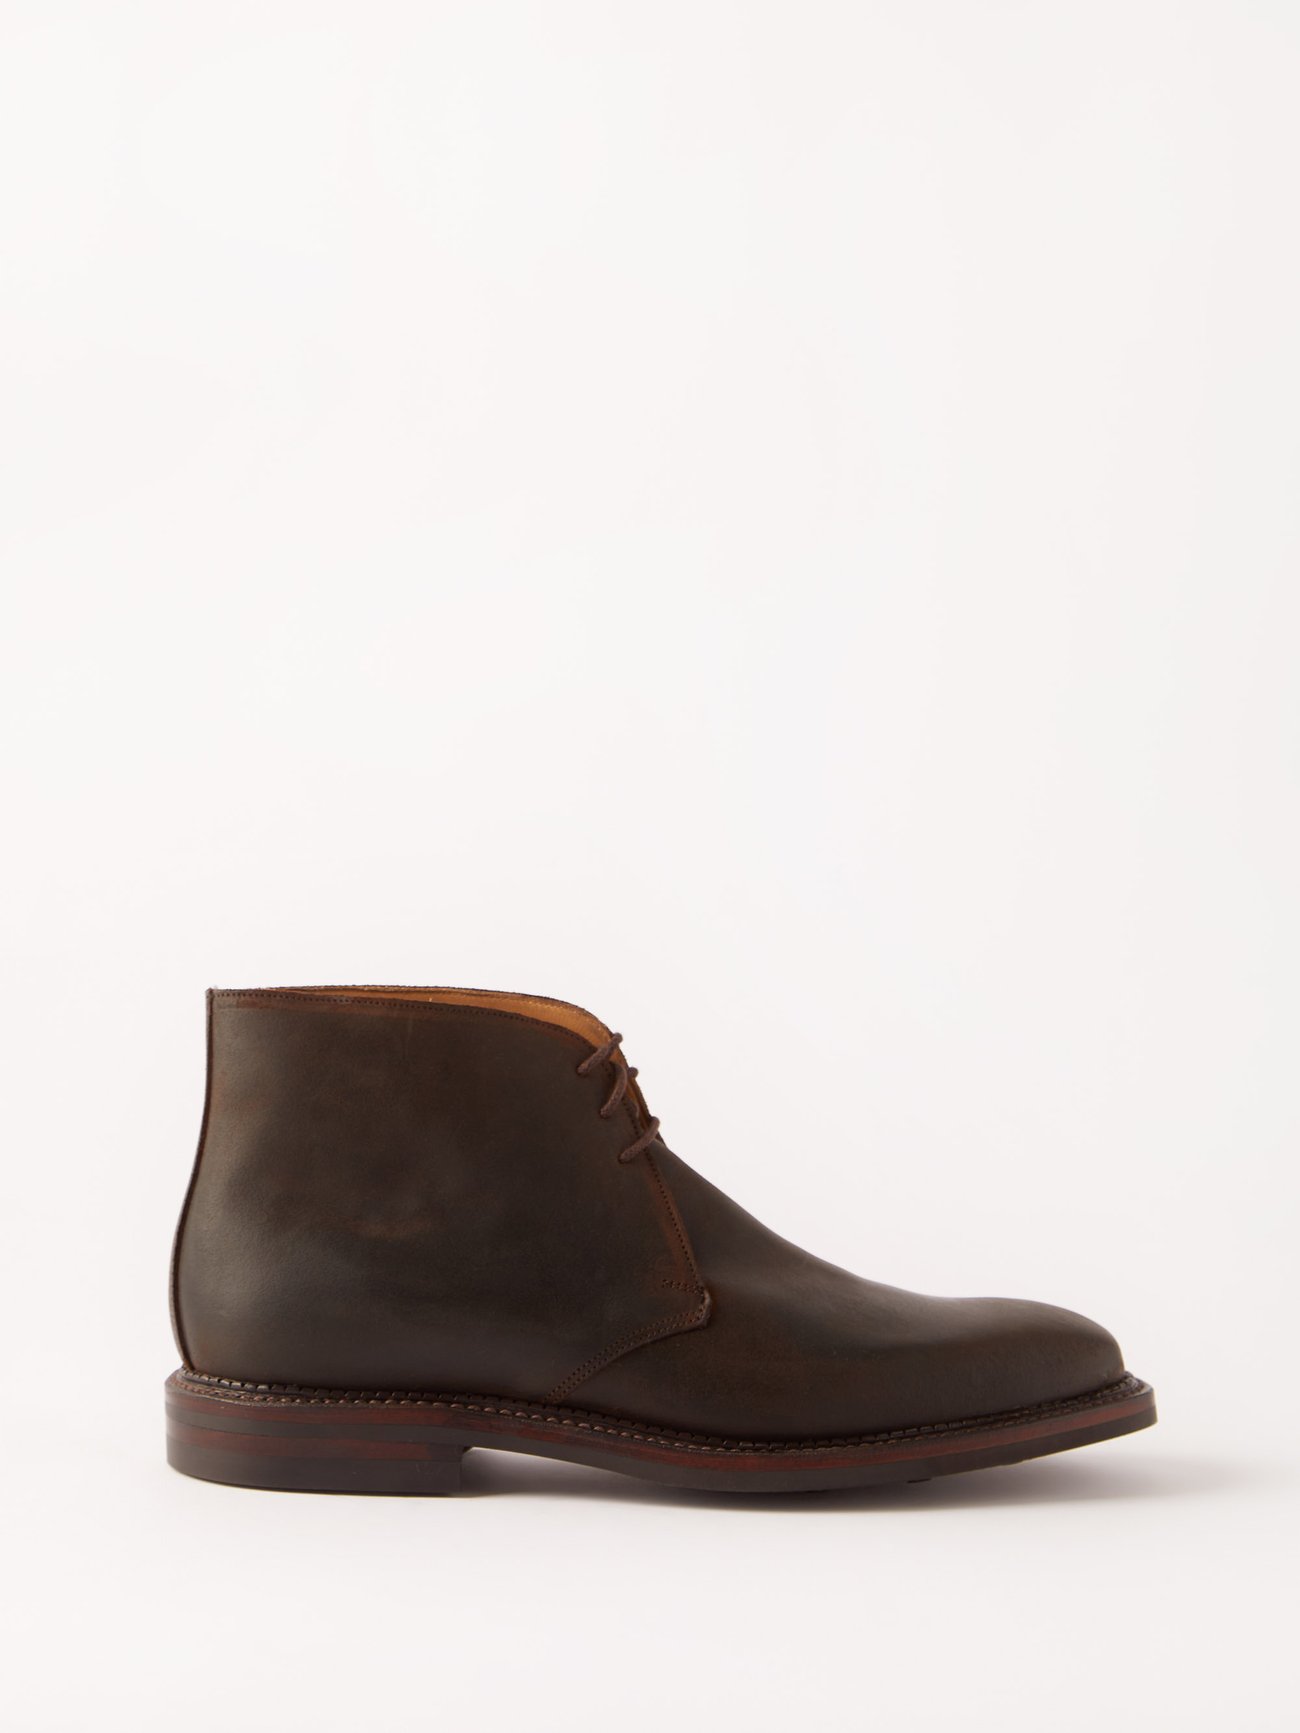 Brown Molton nubuck chukka boots | Crockett & Jones | MATCHES UK